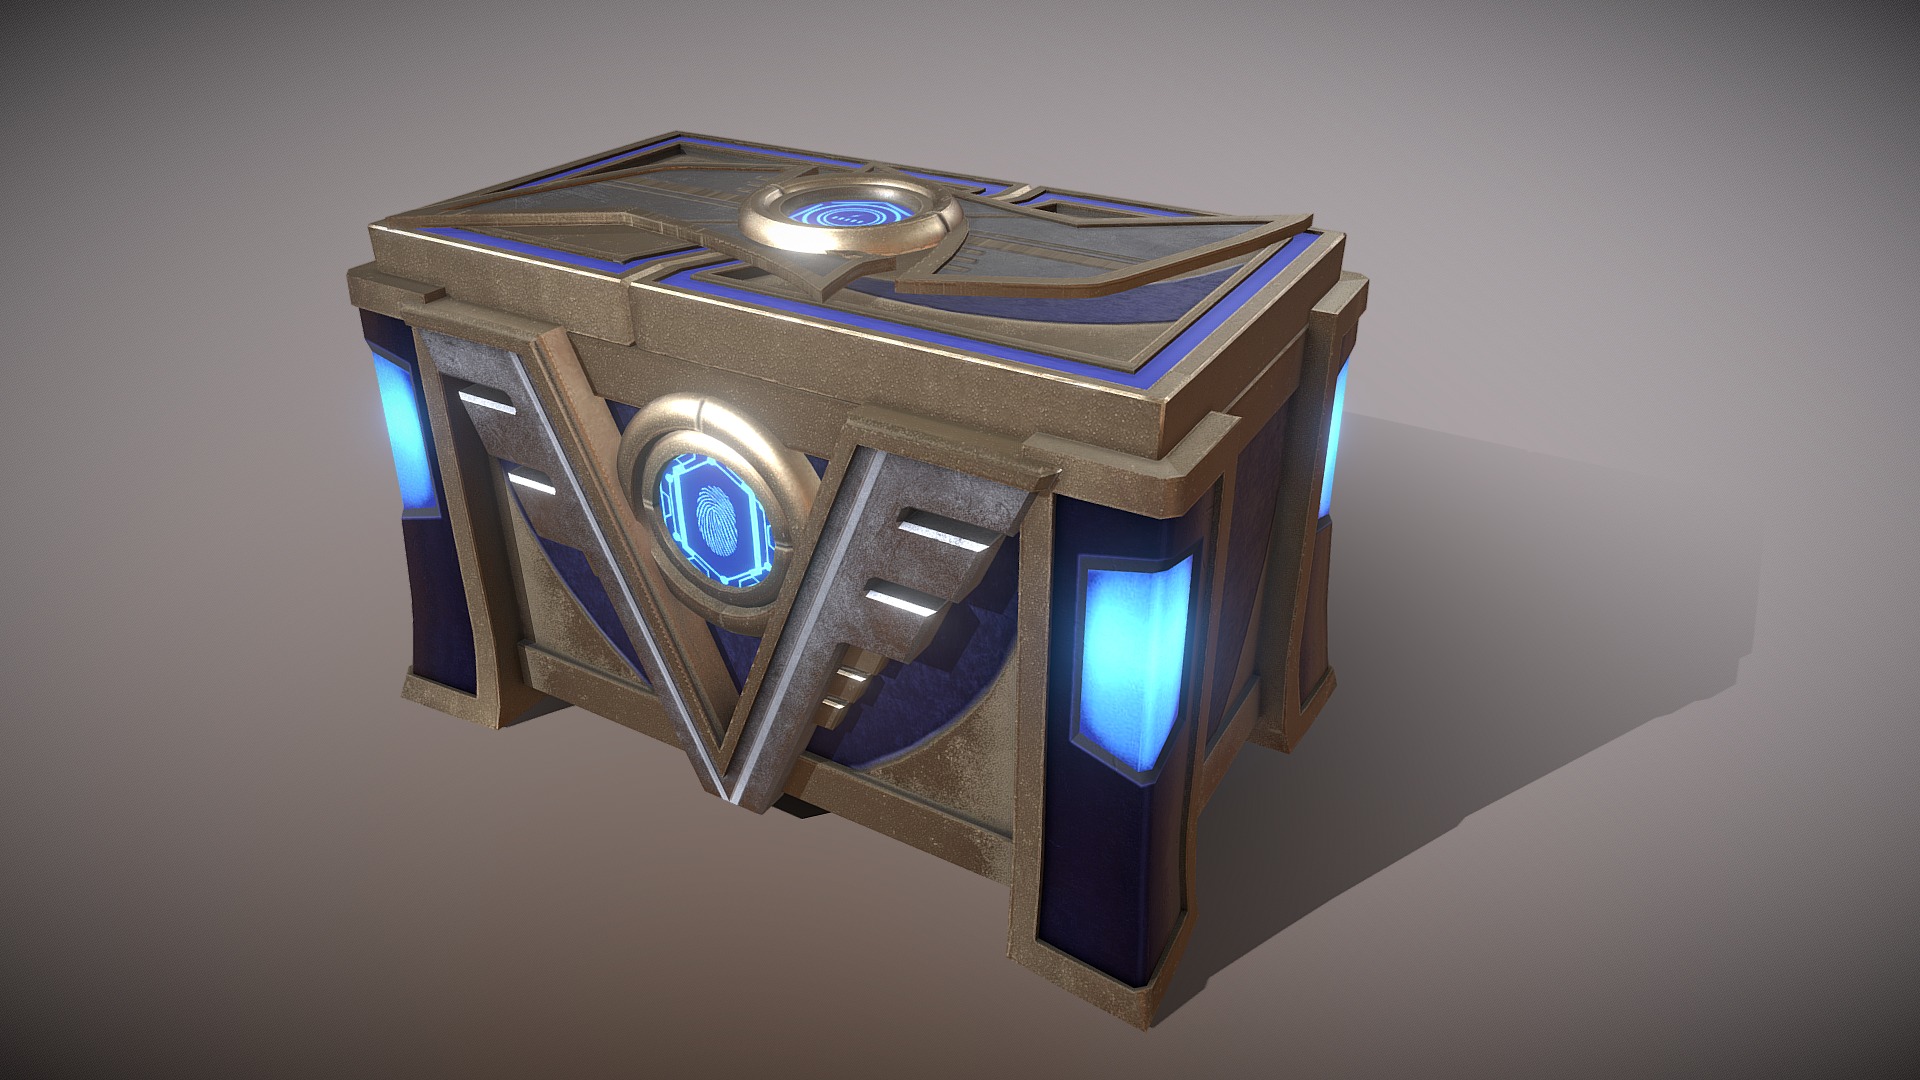 3D model TreasureBox1 - This is a 3D model of the TreasureBox1. The 3D model is about a wooden box with a light inside.